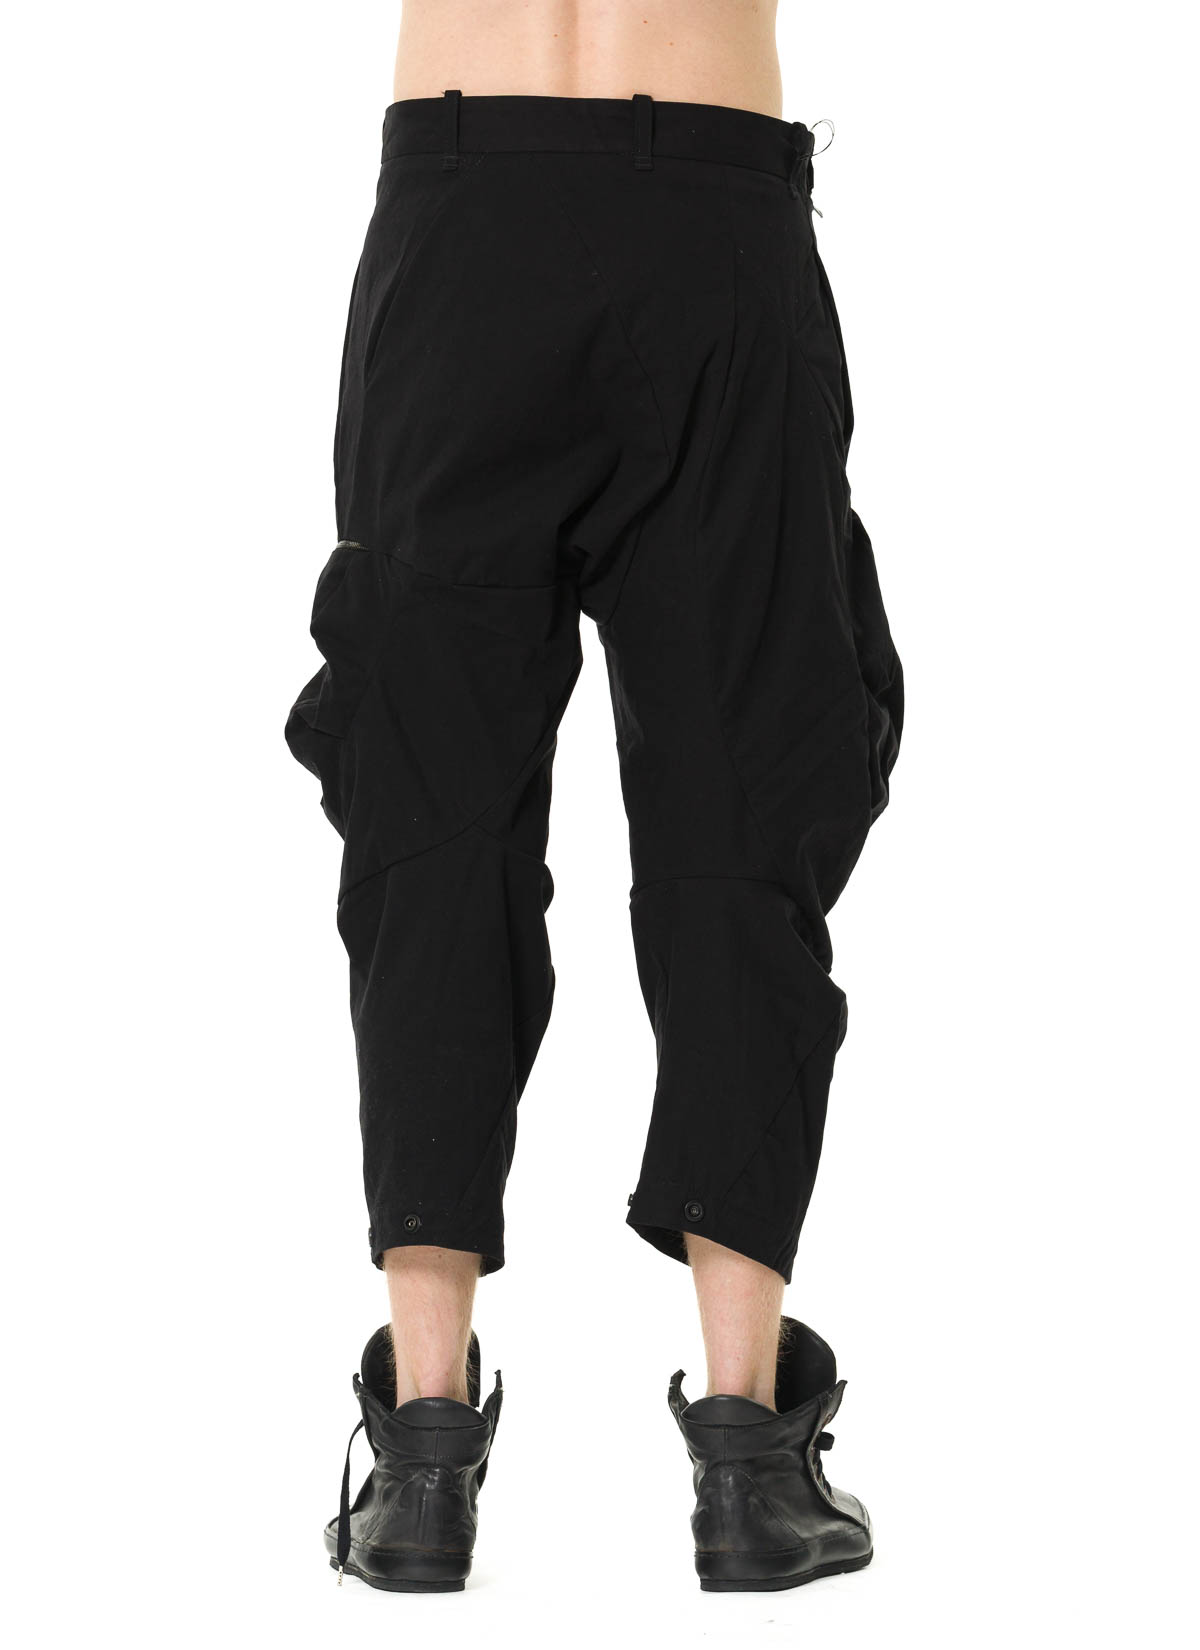 Leon Baggy Trousers | MEAN BLVD | Pants design, Baggy trousers, S models